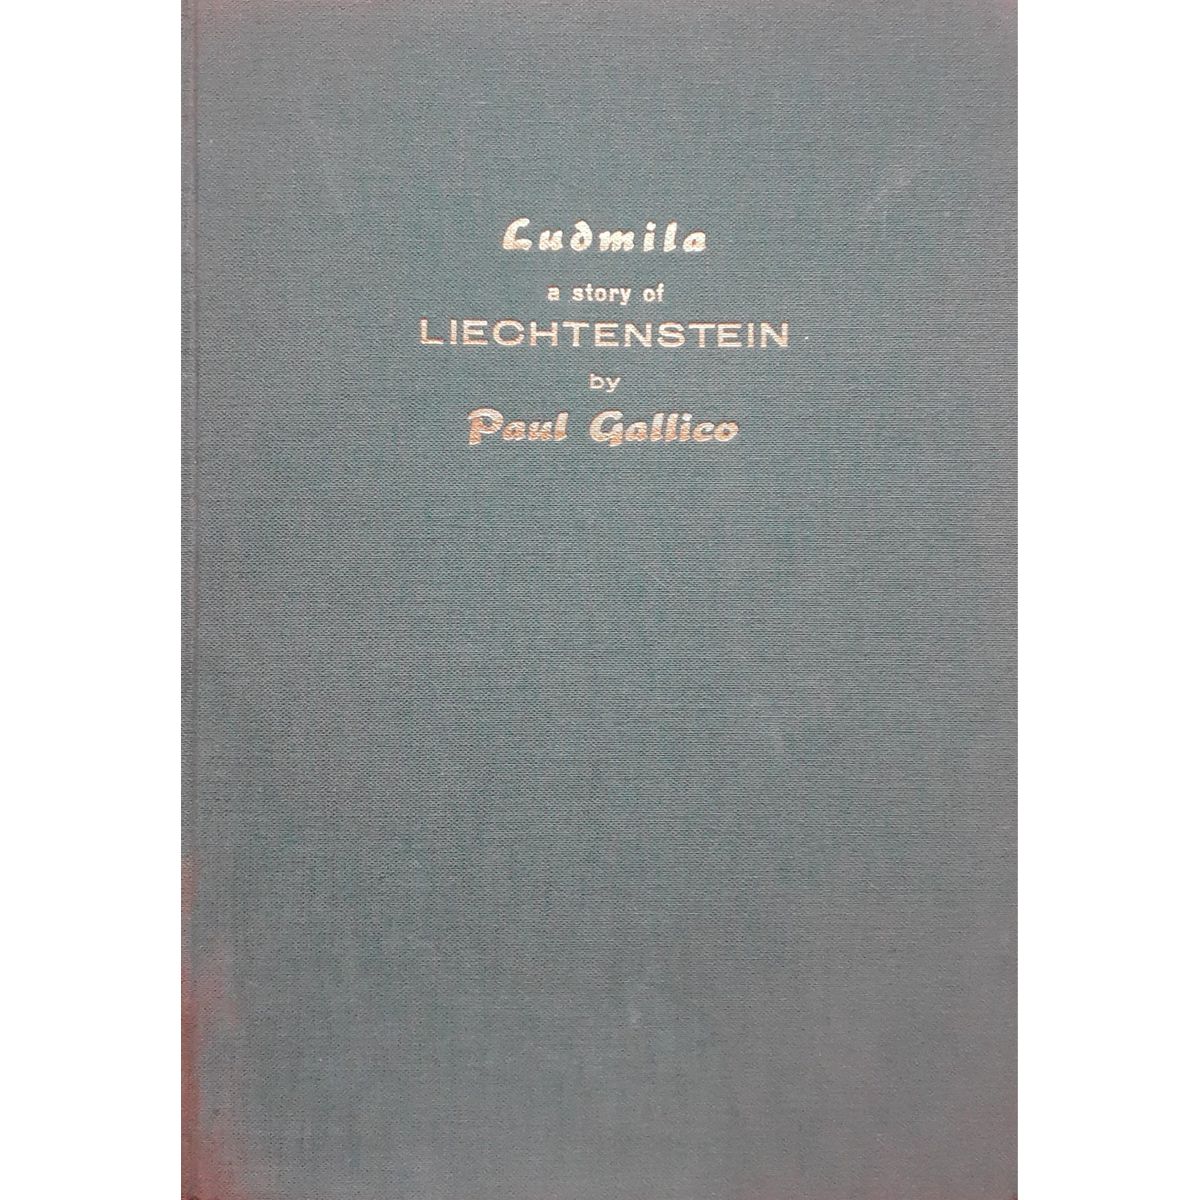 Ludmila: A Story of Liechtenstein by Paul Gallico, 4th Impression [1960]